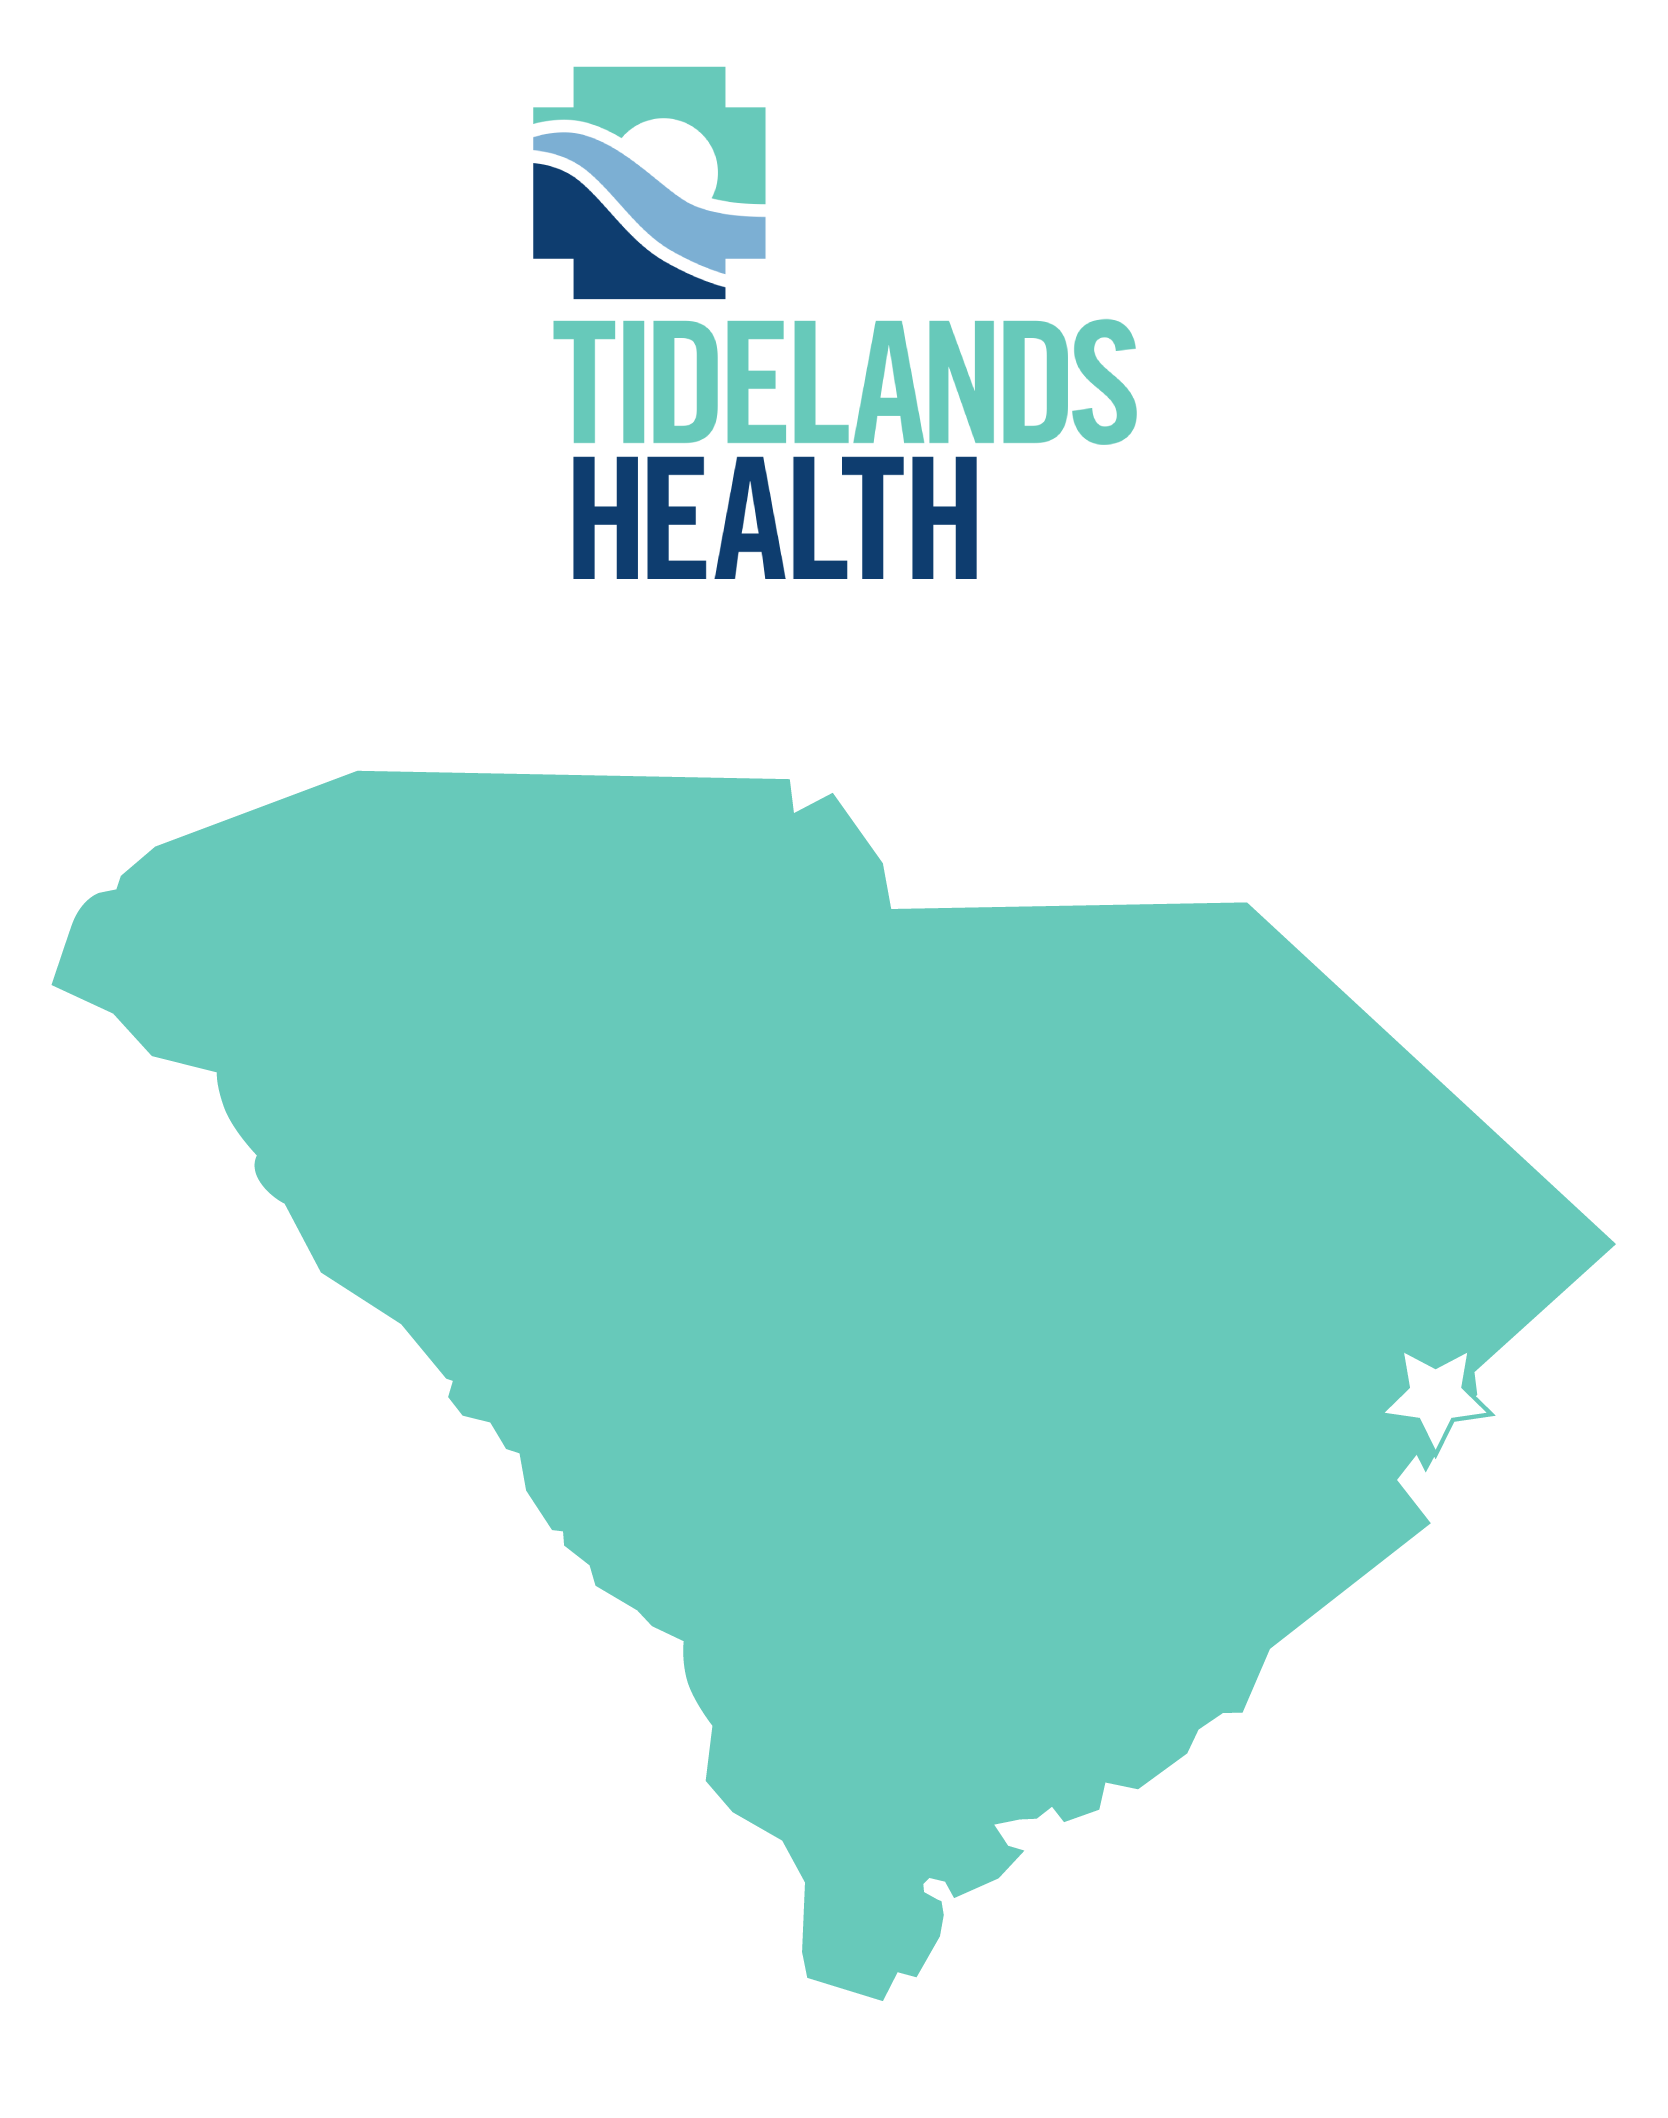 Tidelands Health/MUSC in Murrells Inlet, South Carolina